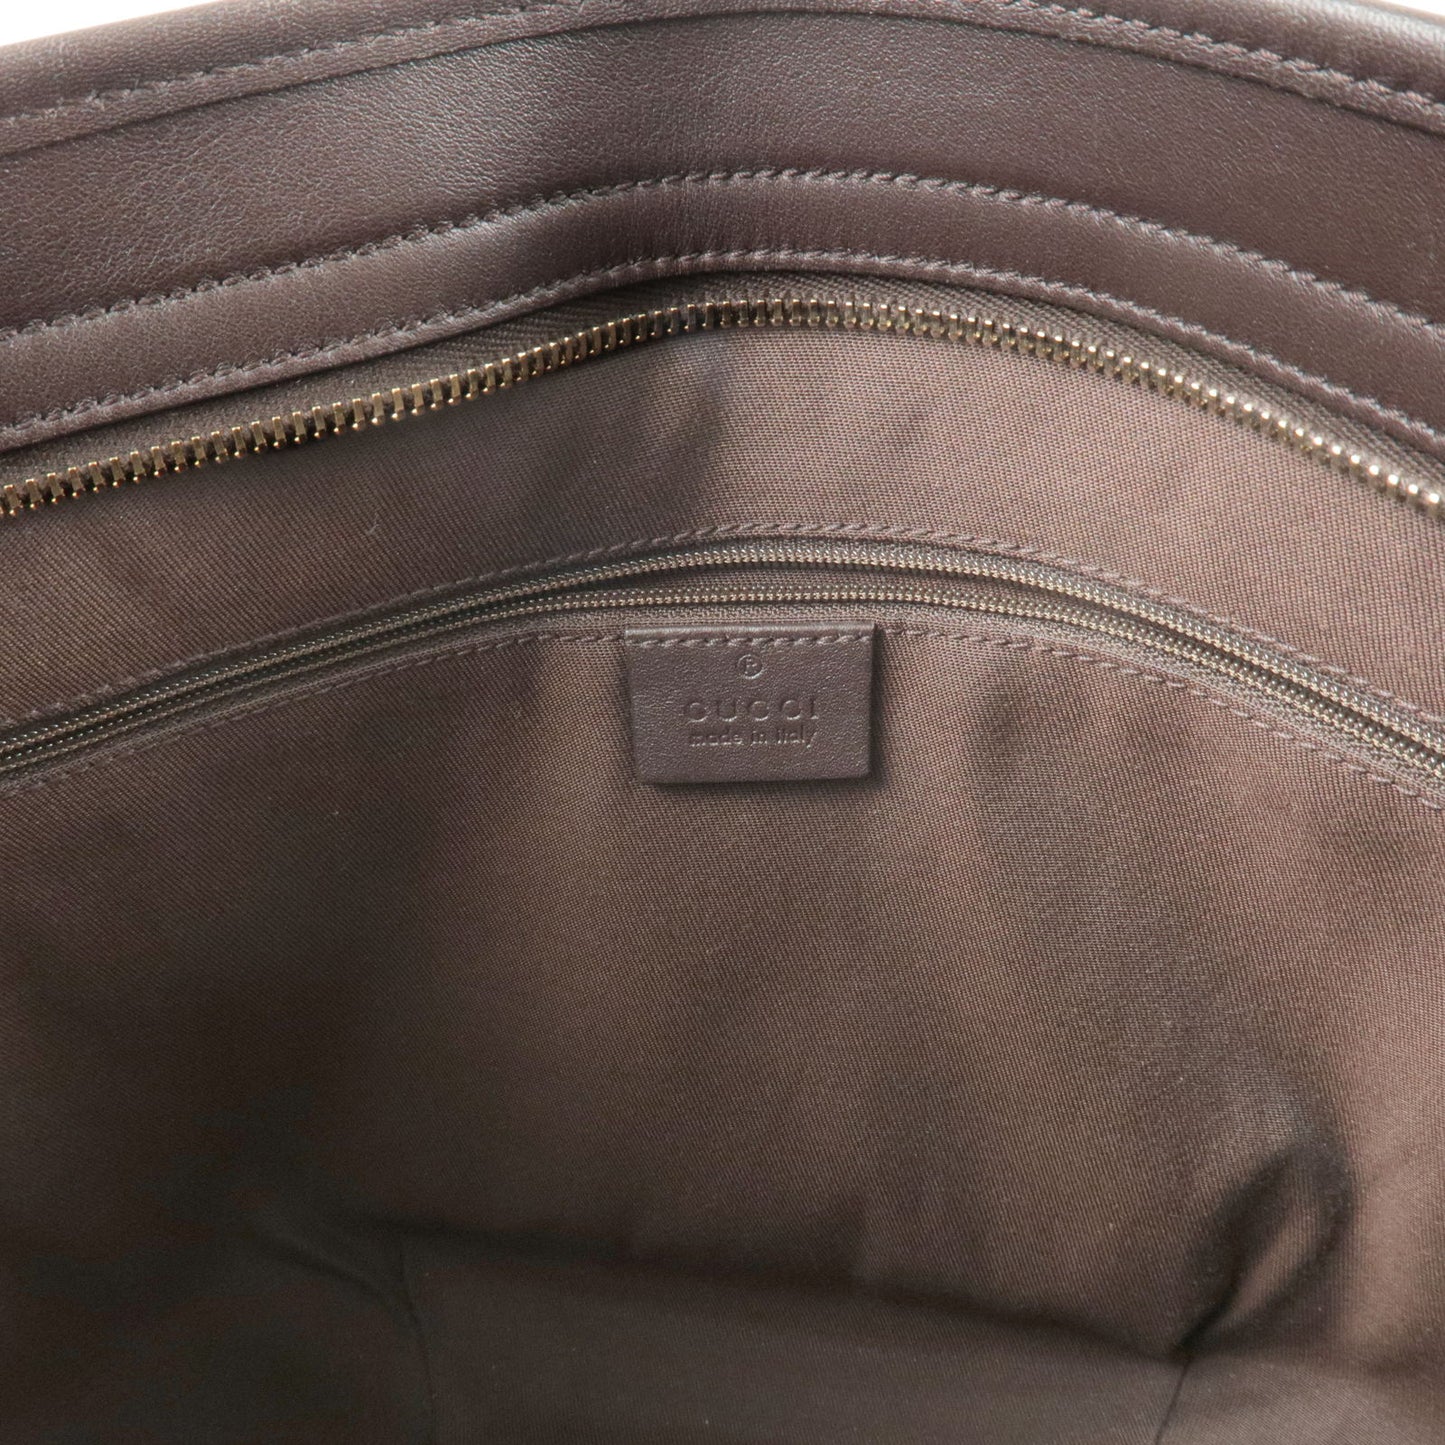 GUCCI GG Canvas Leather Shoulder Bag Beige Brown 388930